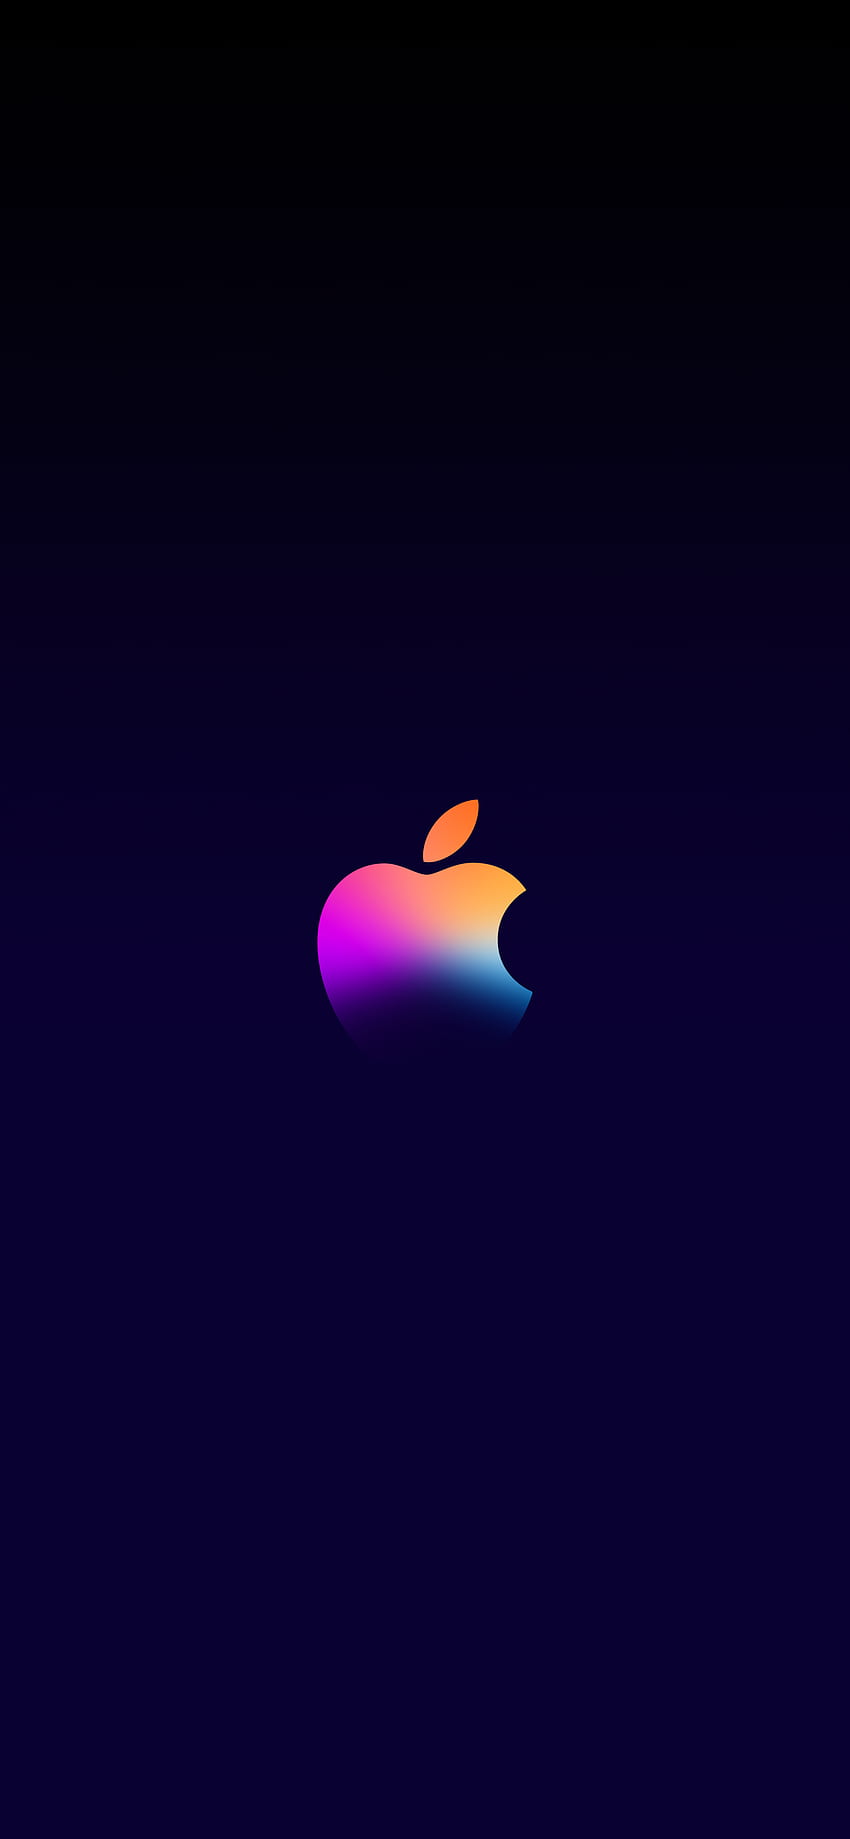 Apple Event One More Thing - Central in 2021. Apple logo iphone, Apple iphone, Apple HD telefon duvar kağıdı